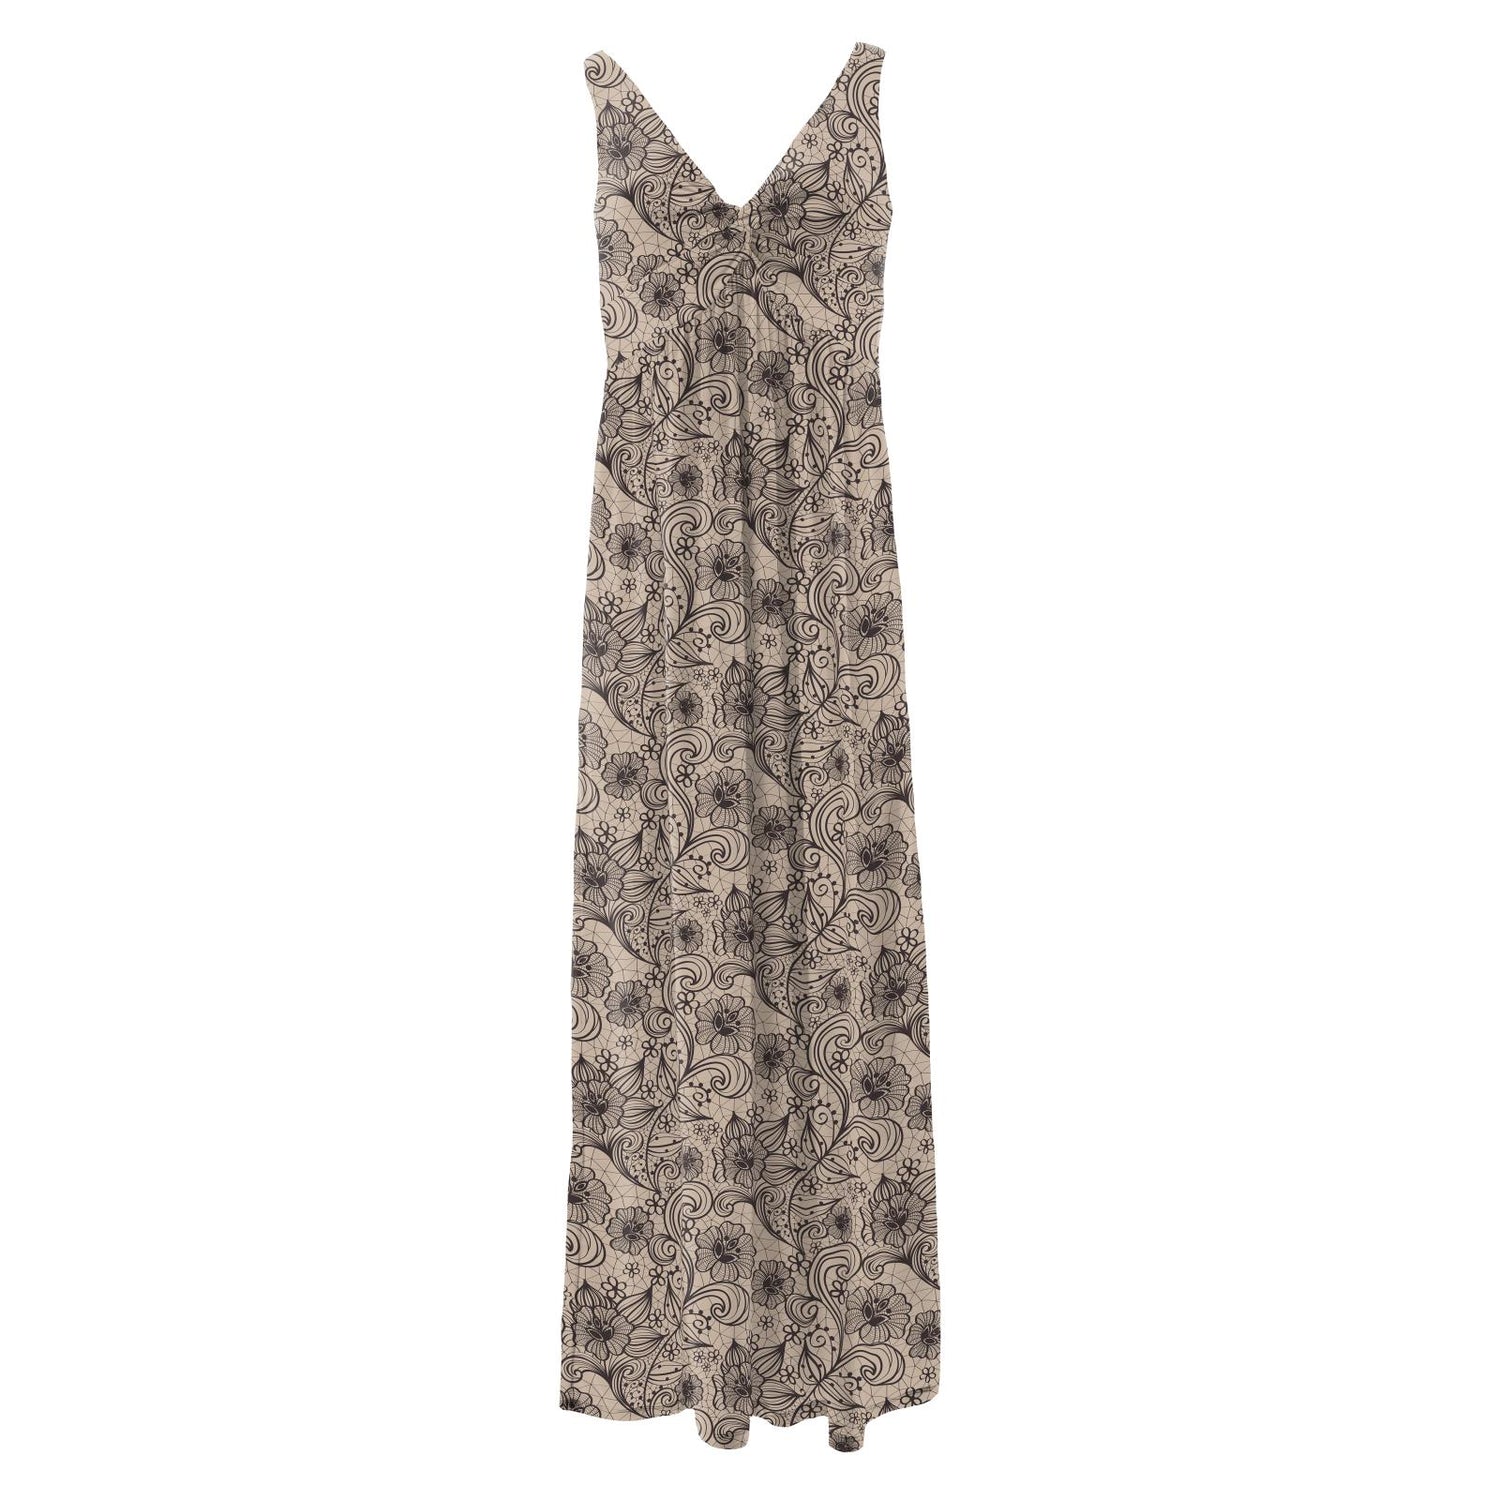 Women's Print Simple Twist Nightgown in Burlap Lace